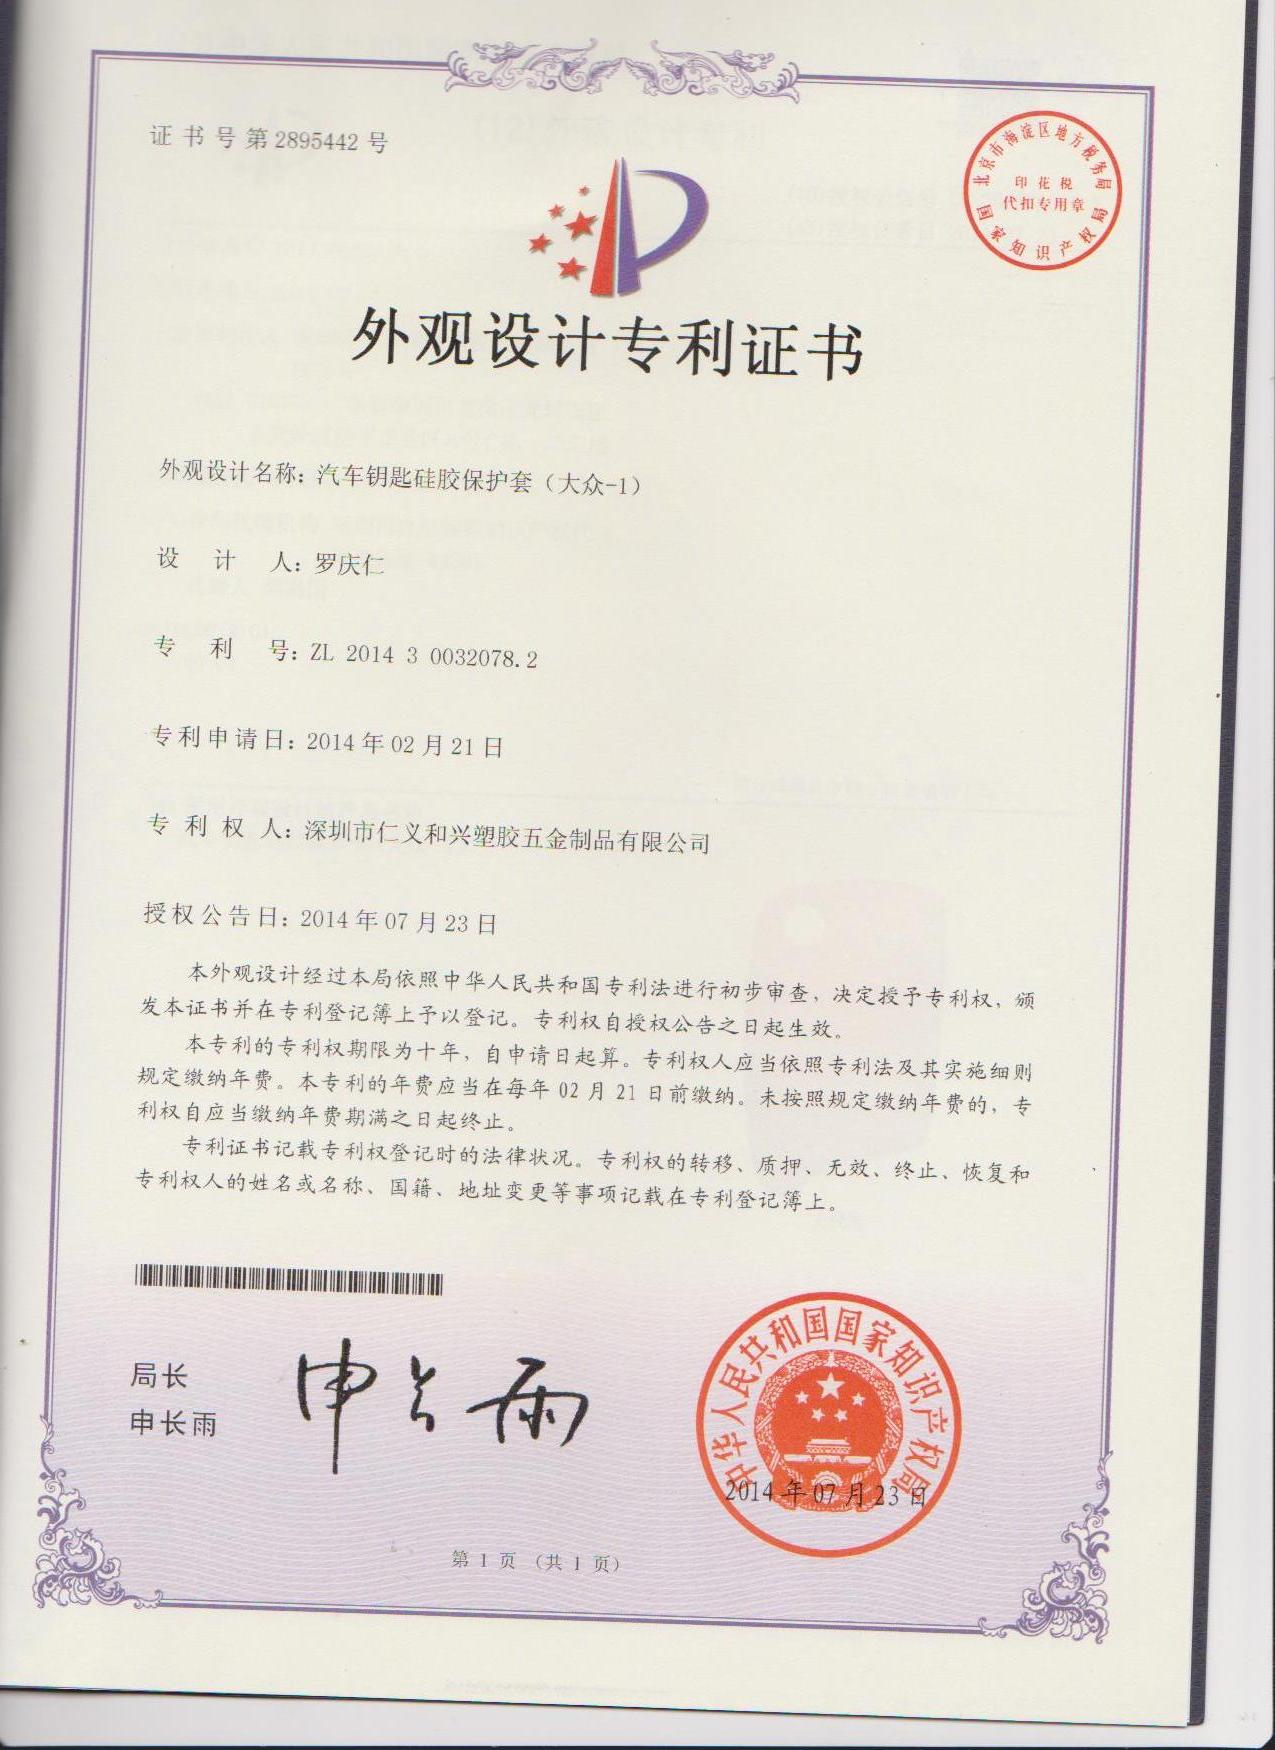 Shenzhen RYHX silicone car key appearance patent-ZL 2014 3 0032078.2